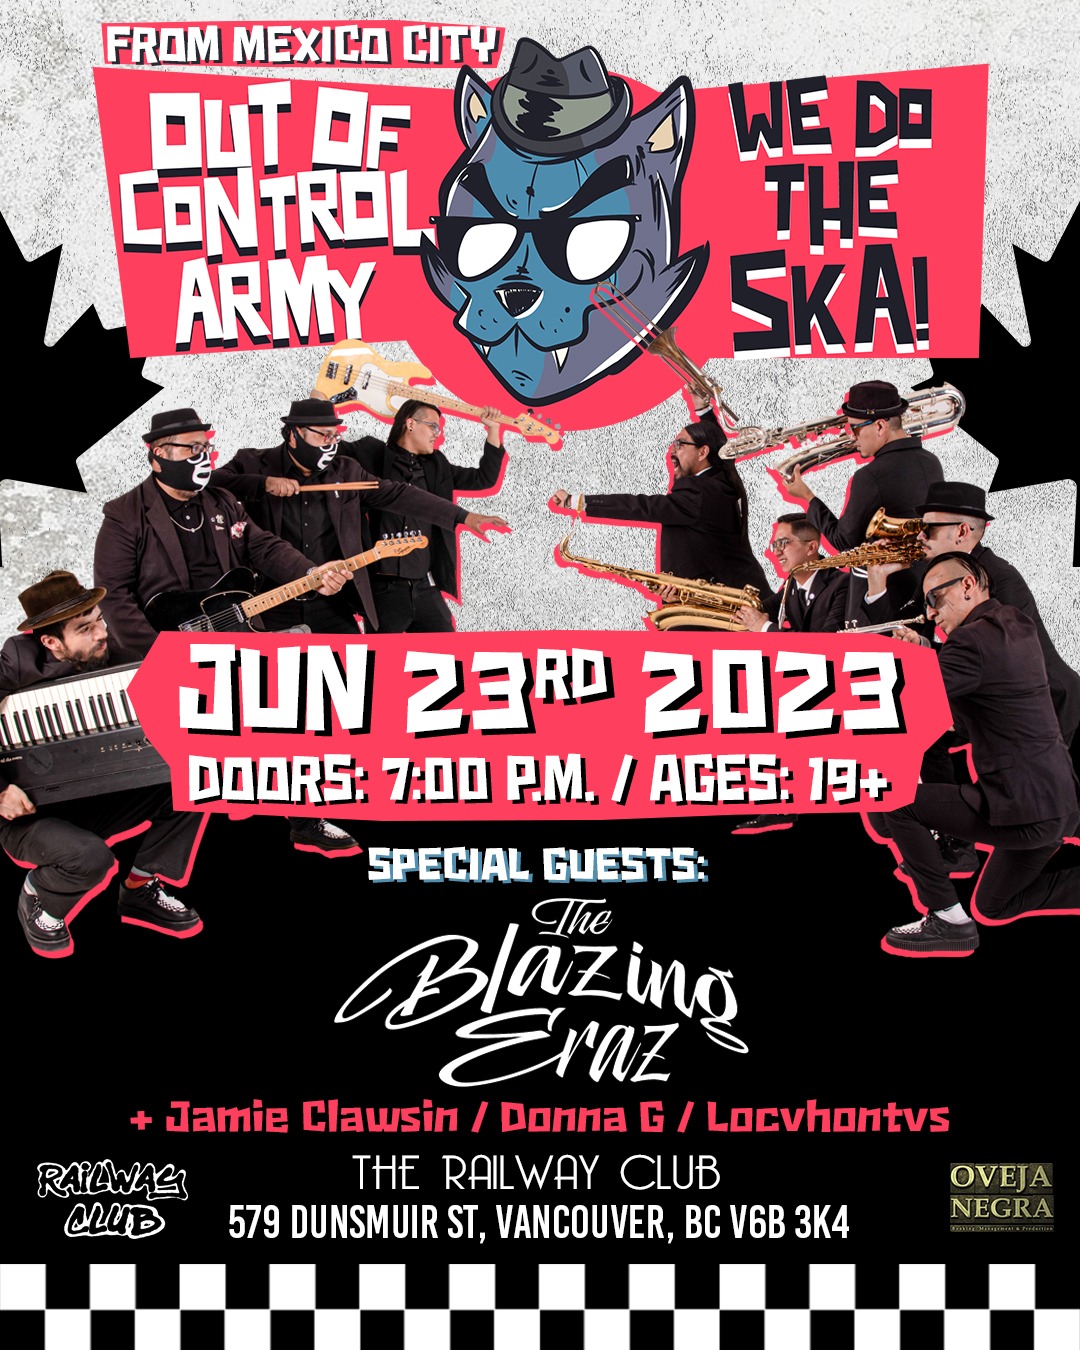 Out Of Control Army, The Blazing Eraz, Locvtontvs, Jamie Clawsin, Donna G